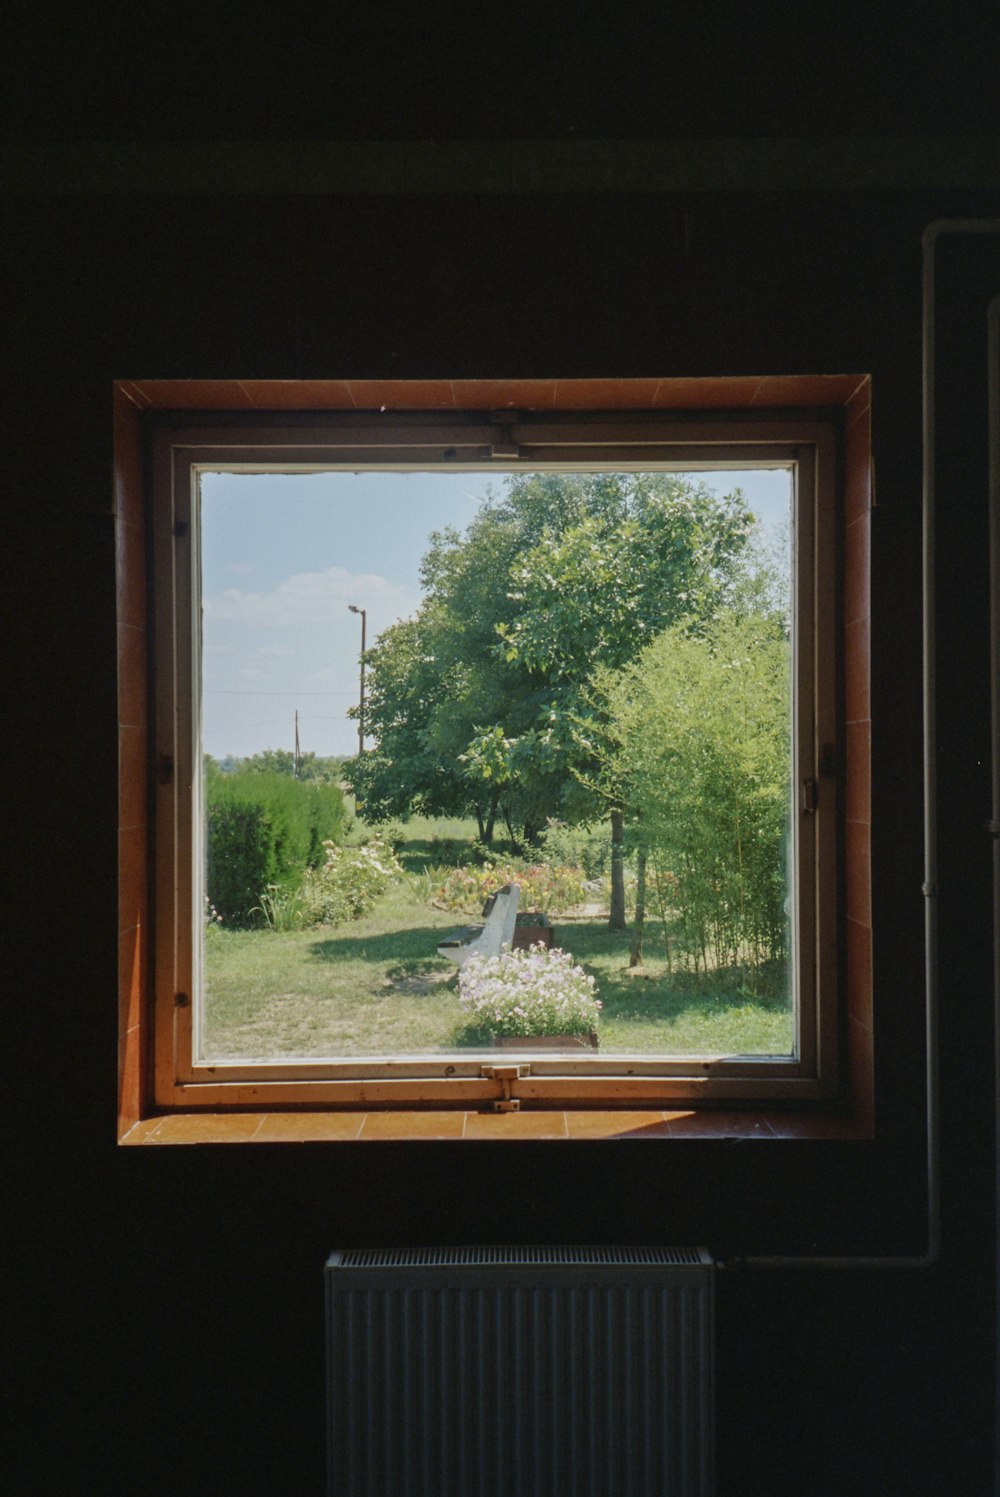 a view of a park through a window